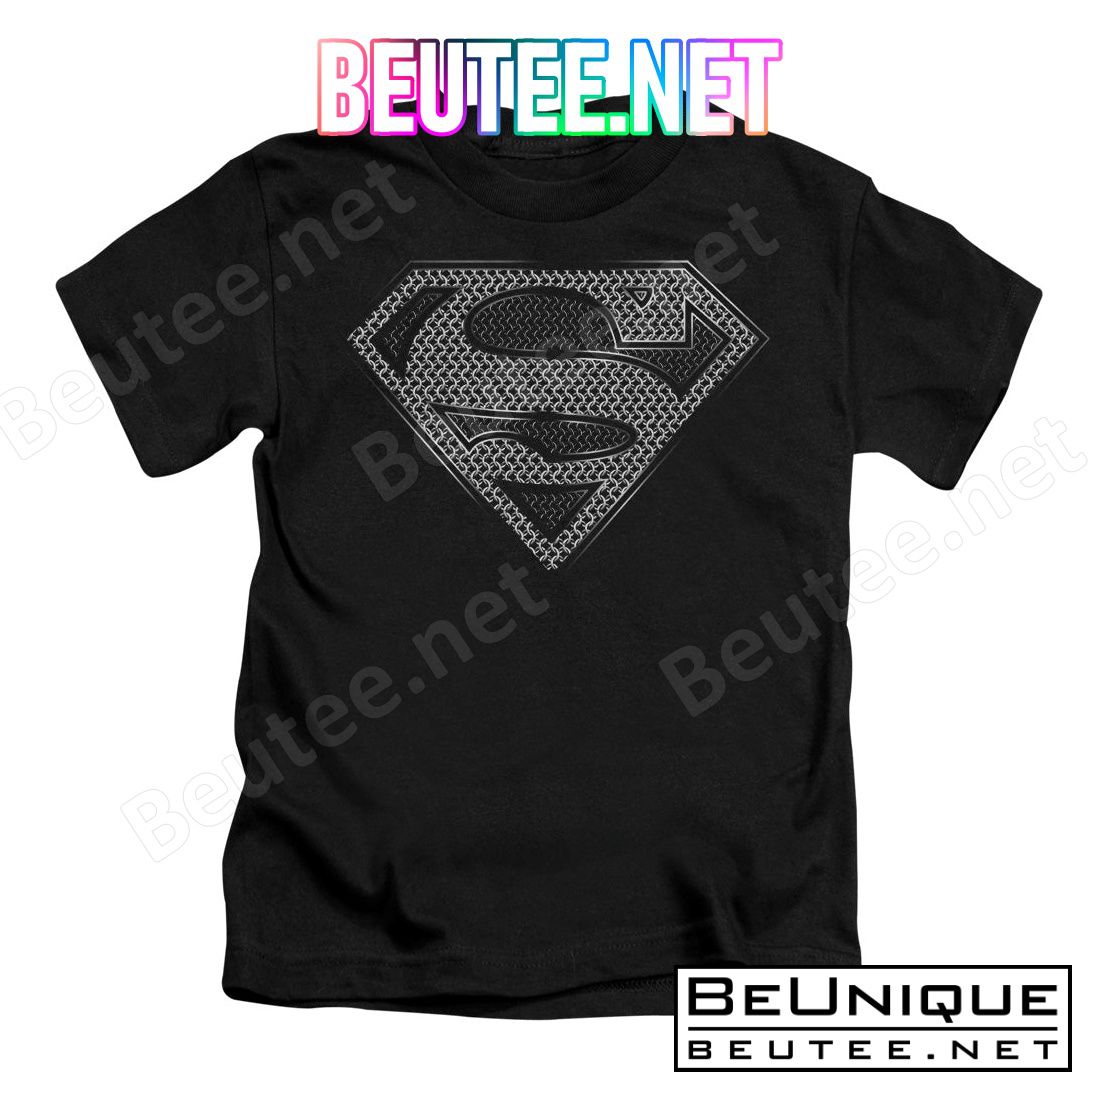 Superman Chainmail Shirt